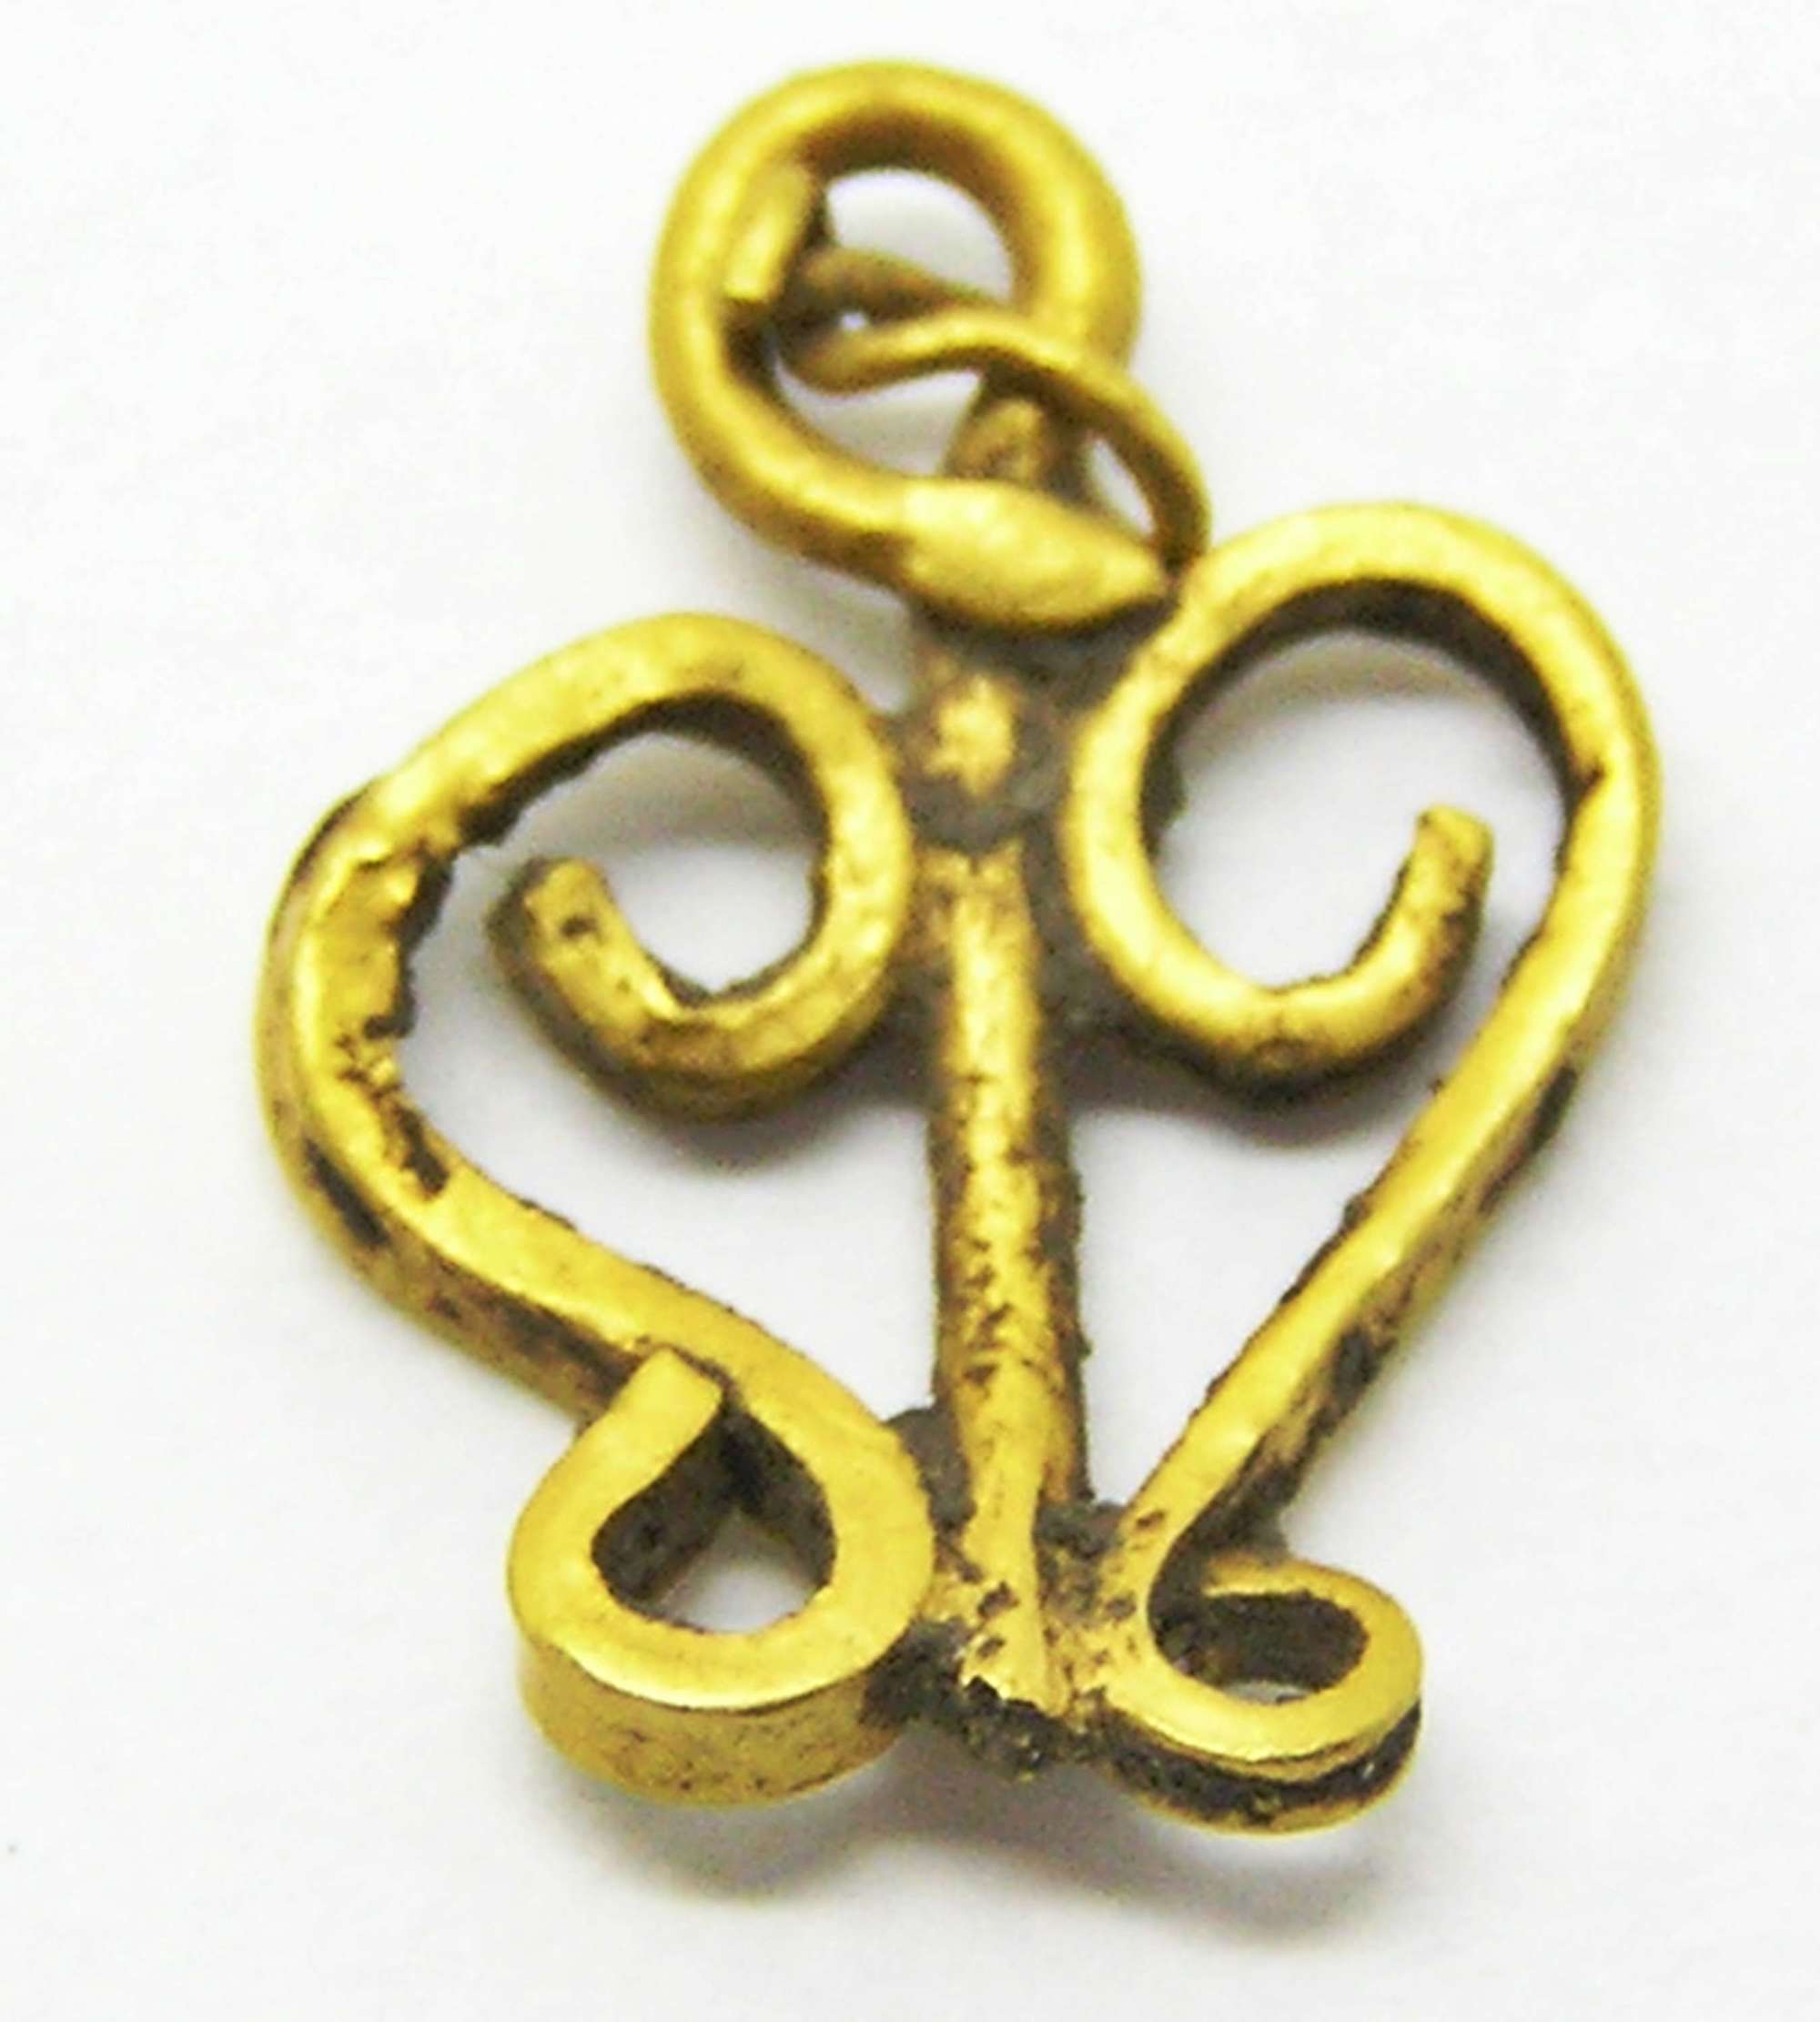 Ancient Roman gold chain necklace component